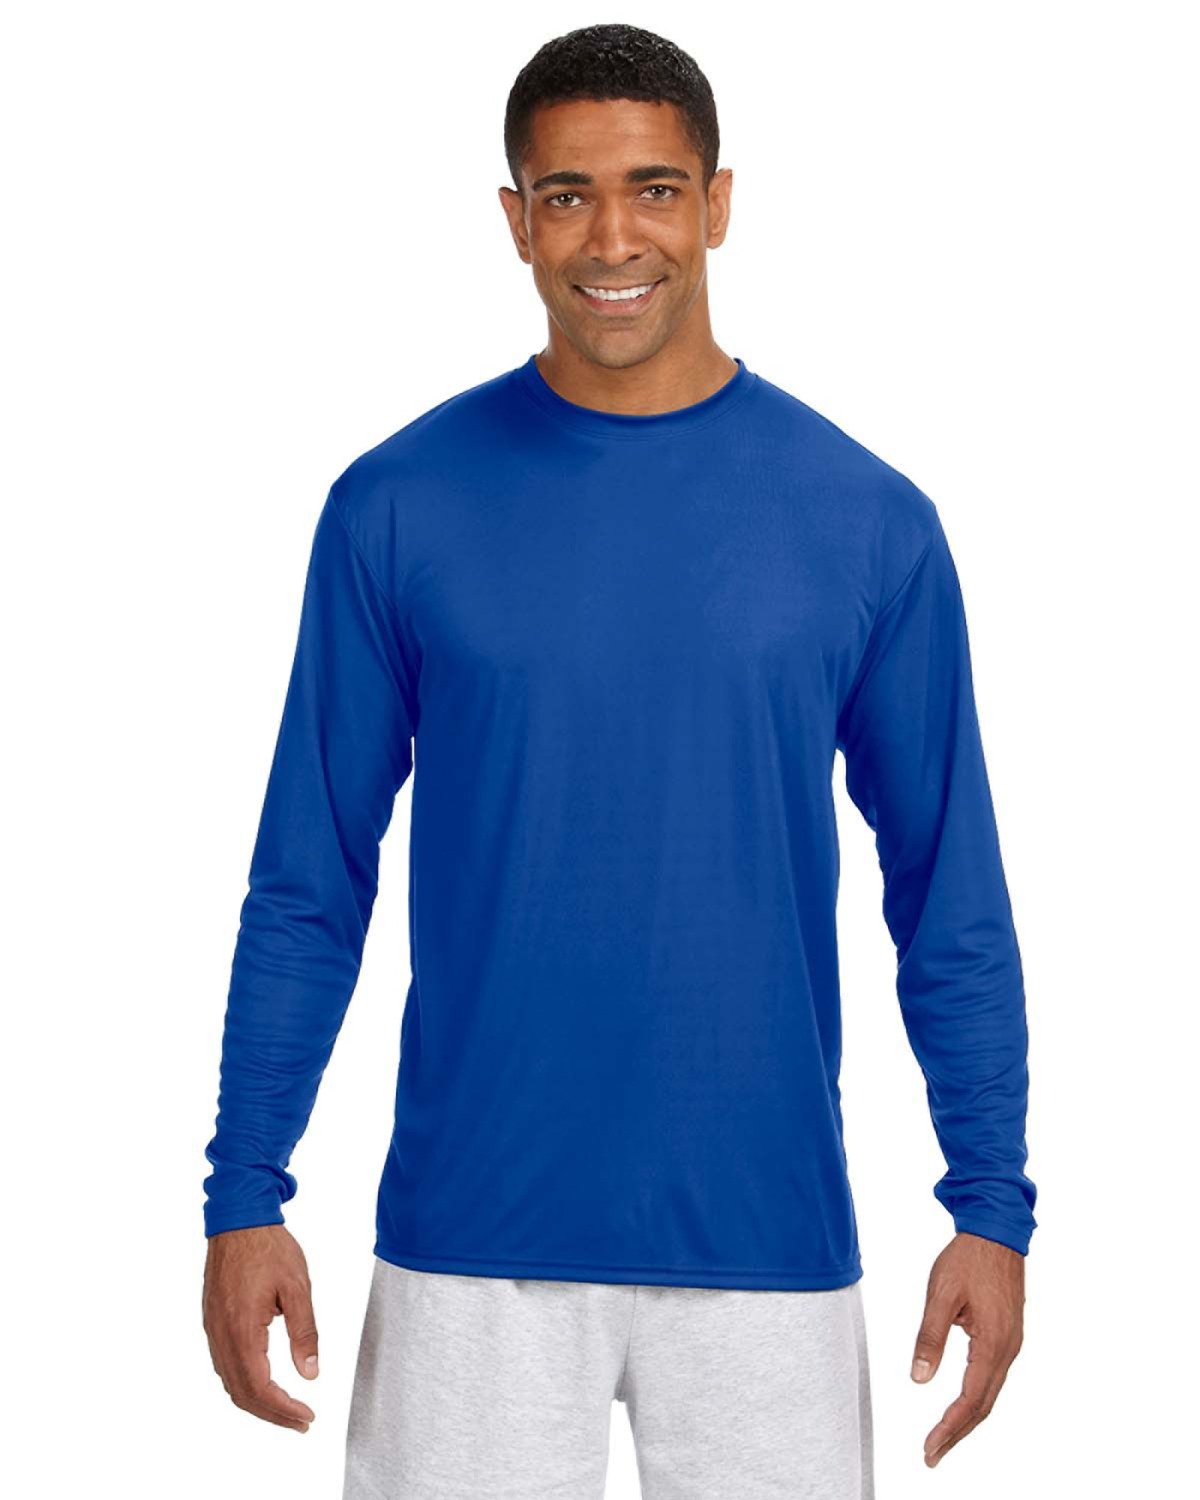 A4 Men's Cooling Performance Long Sleeve T-Shirt royal 